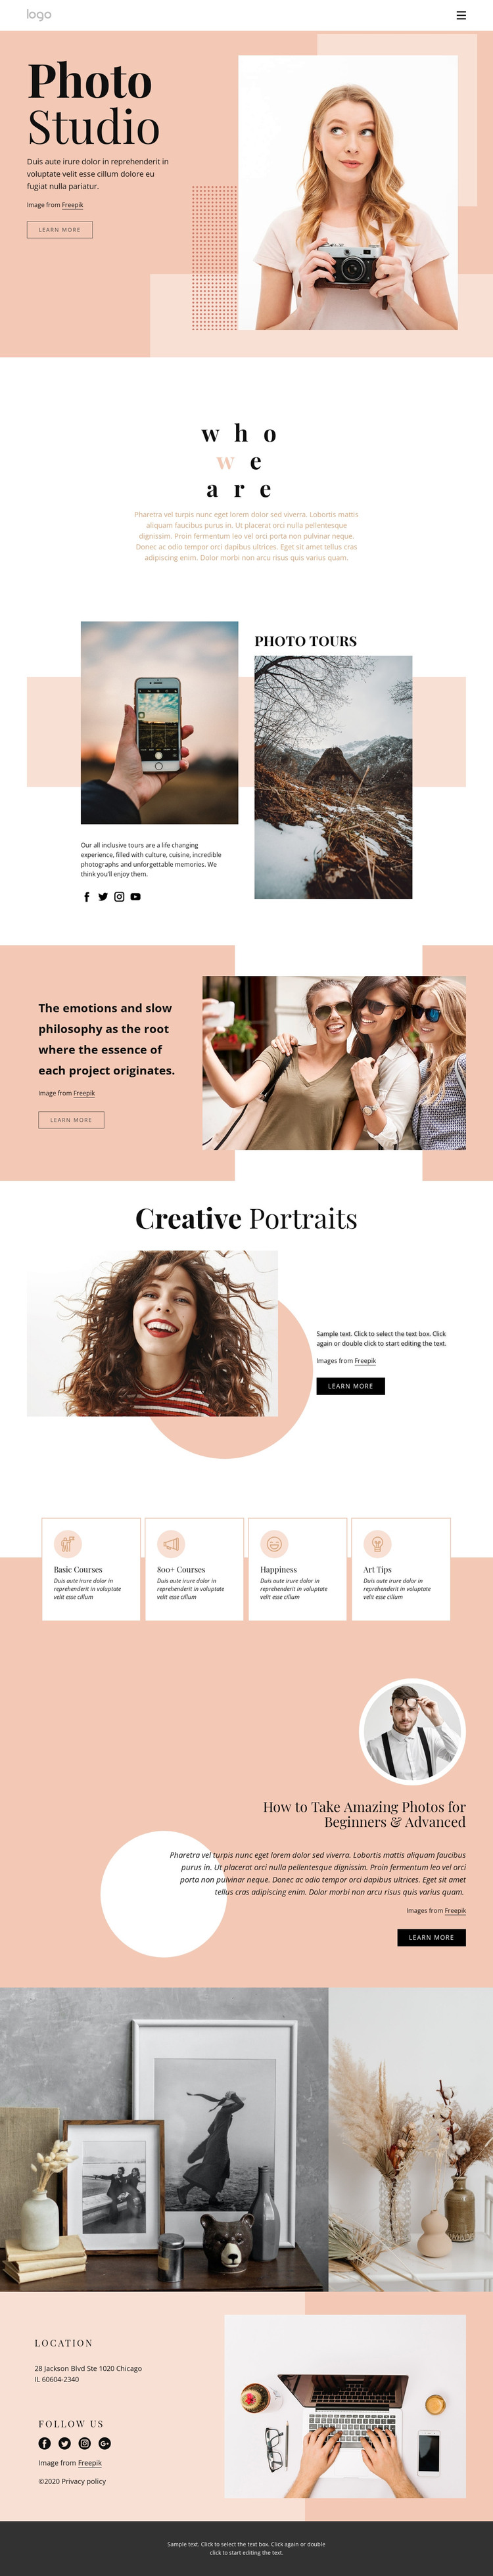 Photography courses WordPress Theme